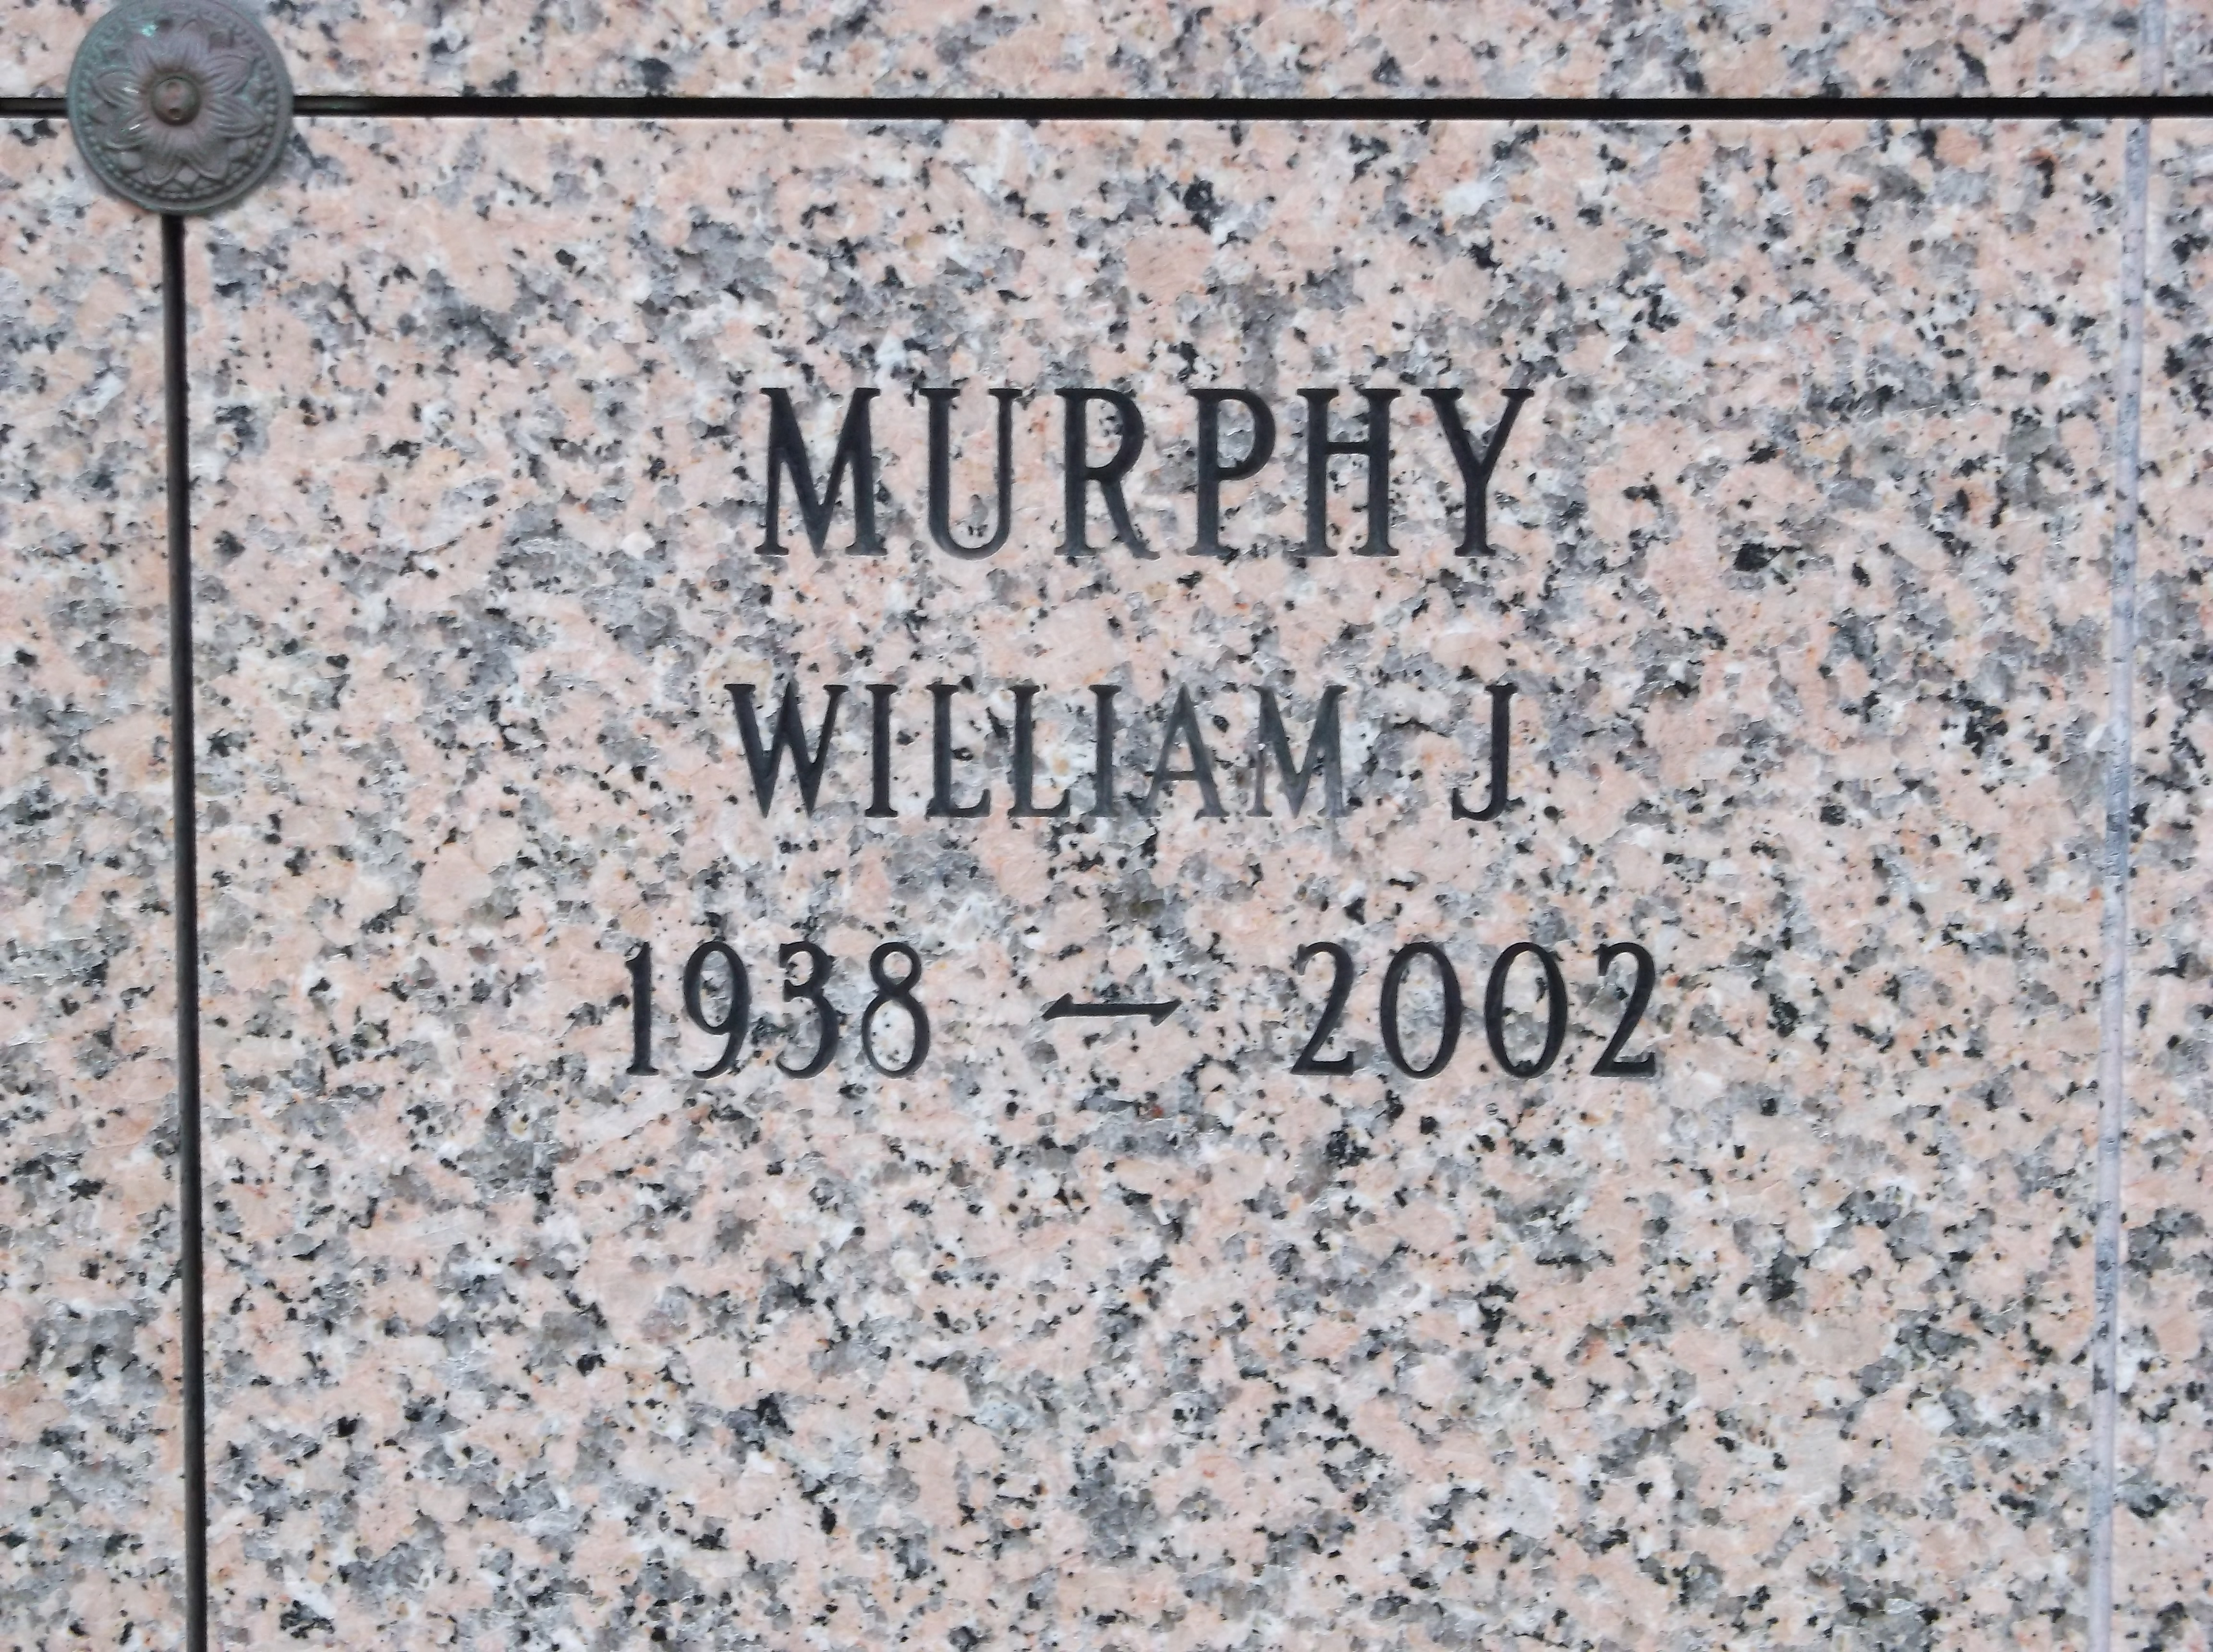 William J Murphy